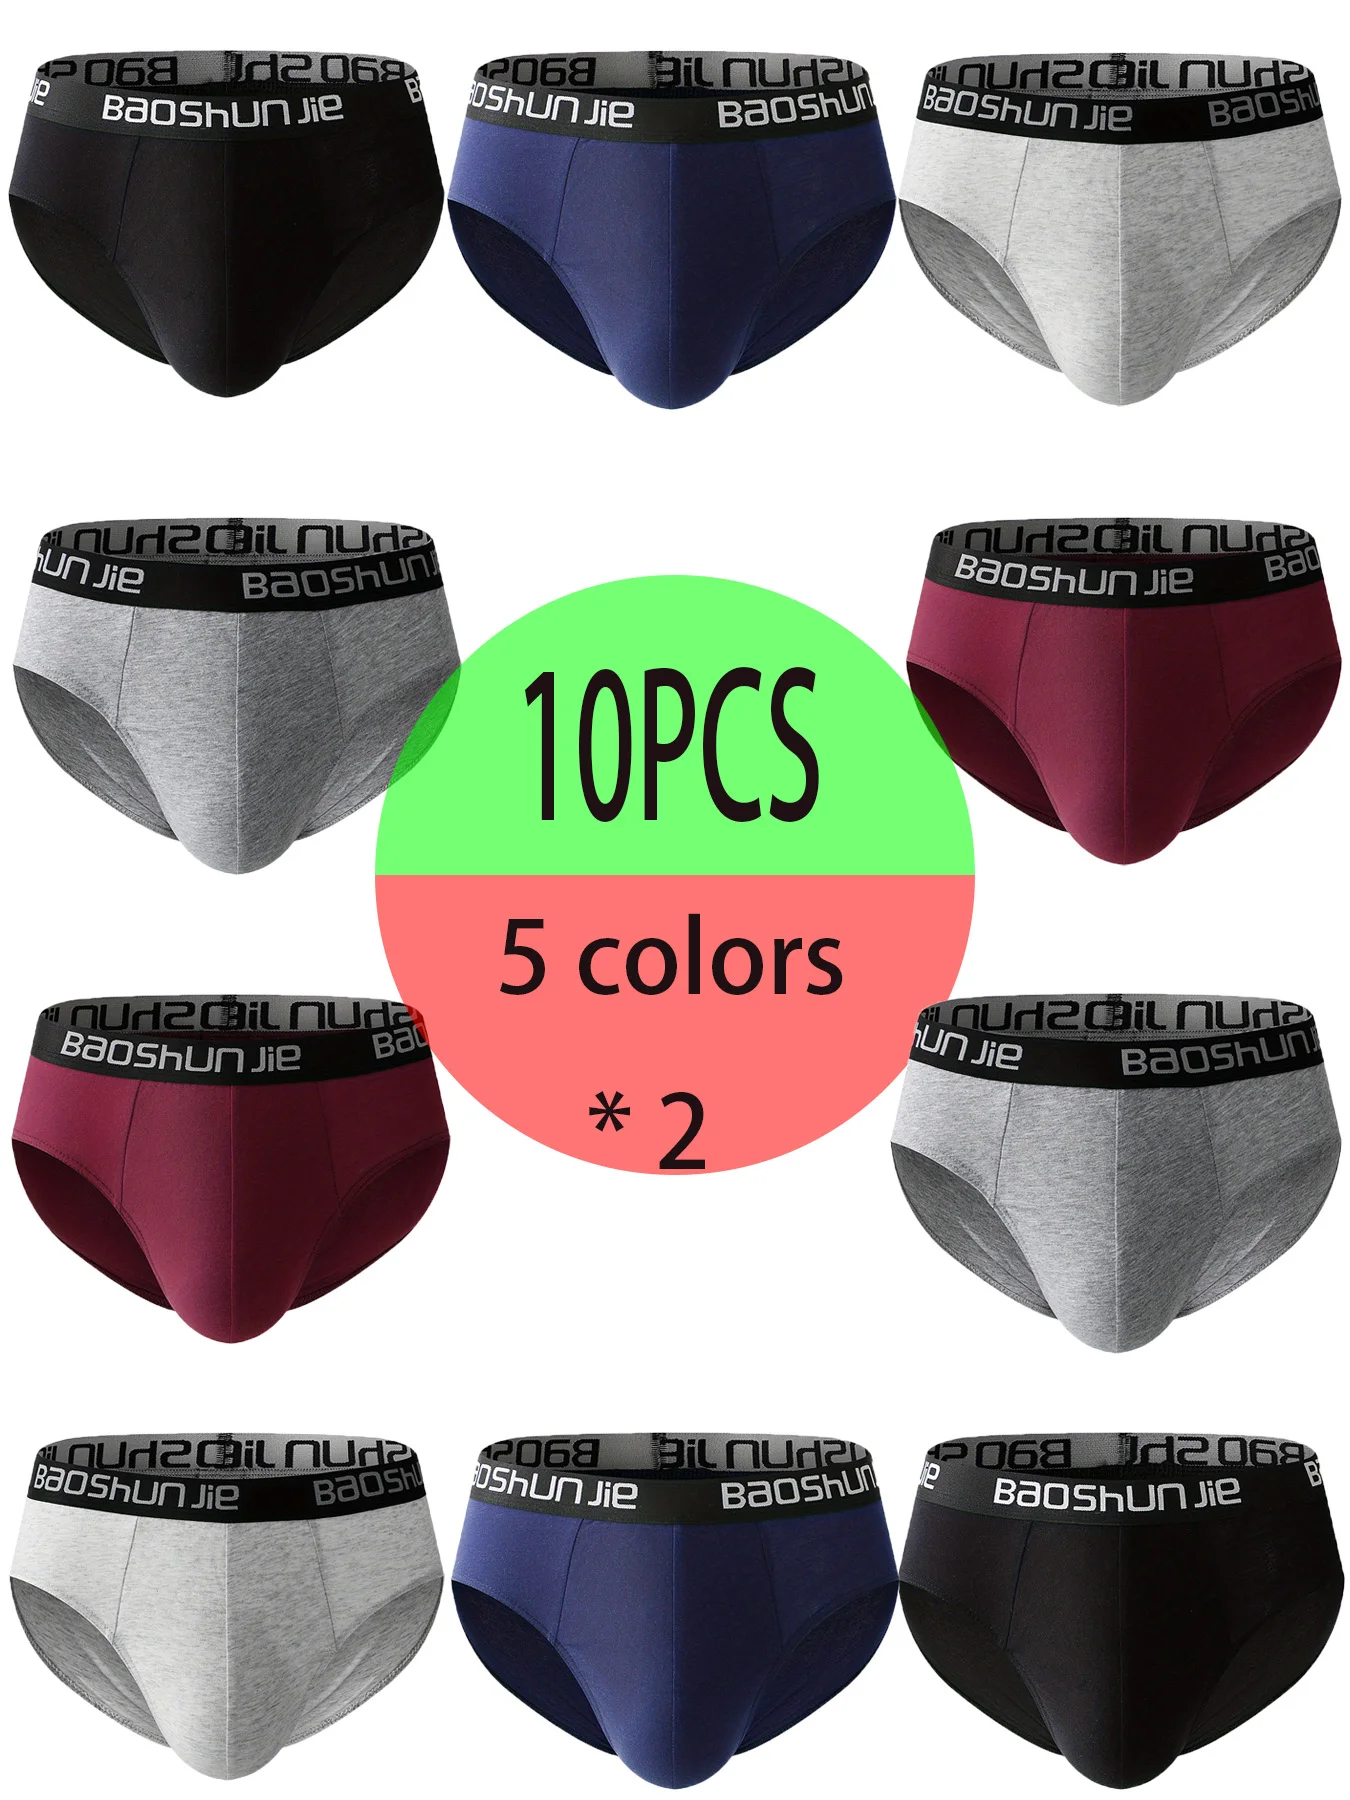 10PCS men's underwear comfortable breathable men's briefs casual solid color cotton underwear for men